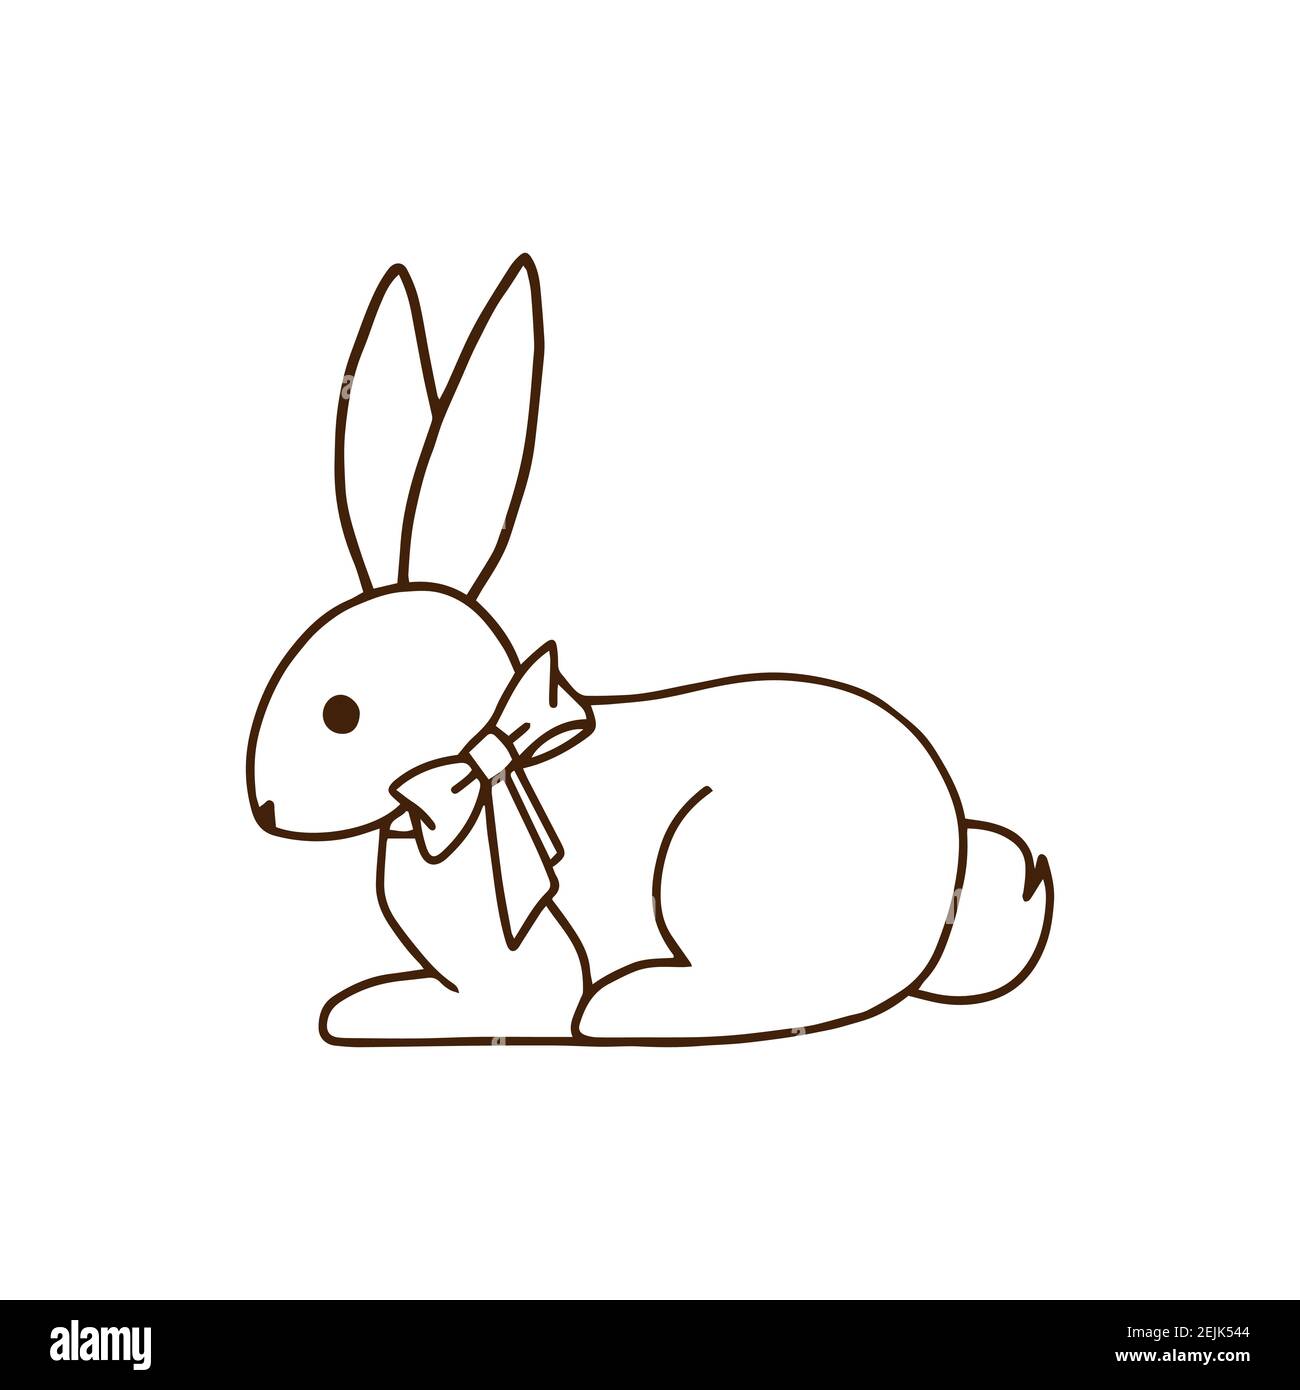 खरगोश #सुंदर #जानवर #घास #खरगोश #पुराने_टीवी_पर_बाहरी_एंटीना #प्यारा #मिठाई  #जिज्ञासु #पालतू #प्राकृतिक #बालदार #rabbit #lovely #… | Love pet, Rabbit,  Rabbit facts